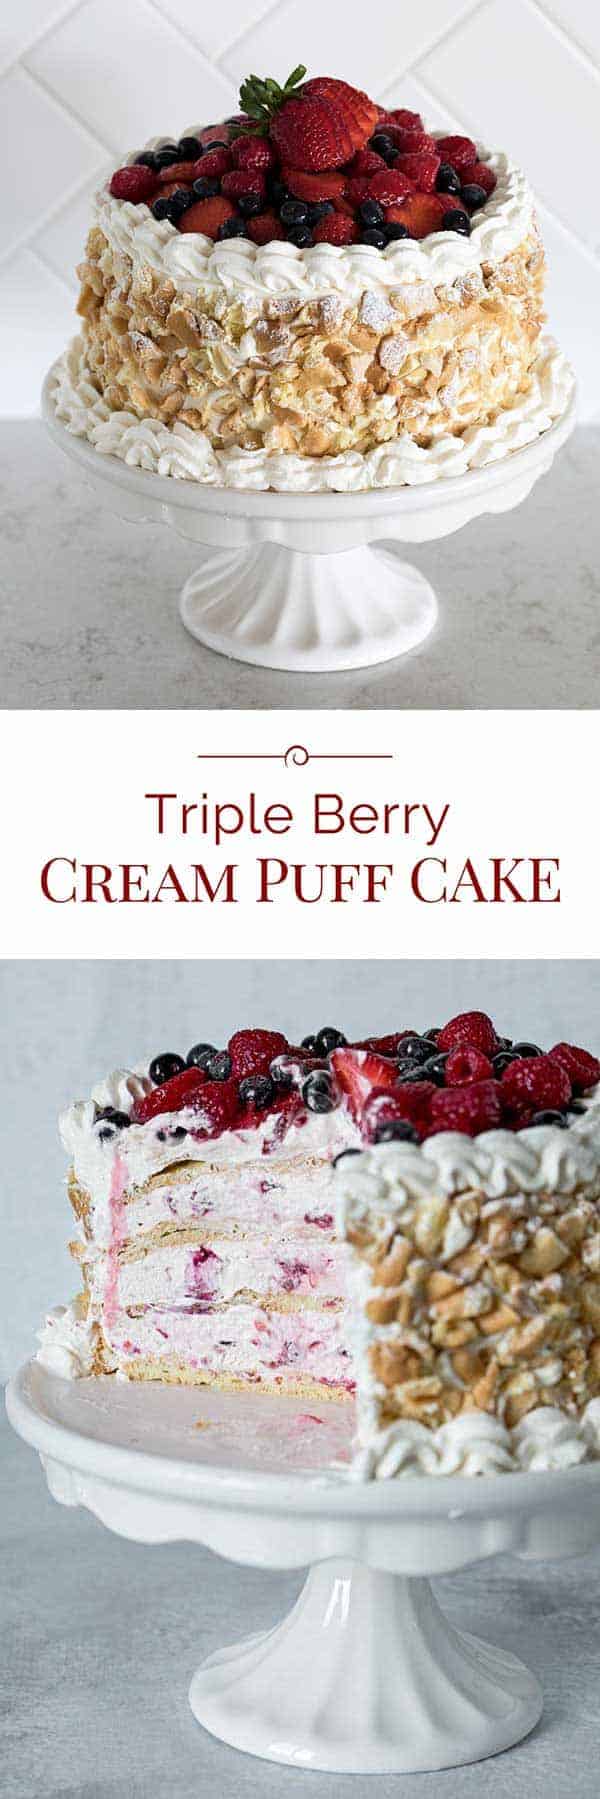 Triple-Berry-Cream-Puff-Cake-Collage